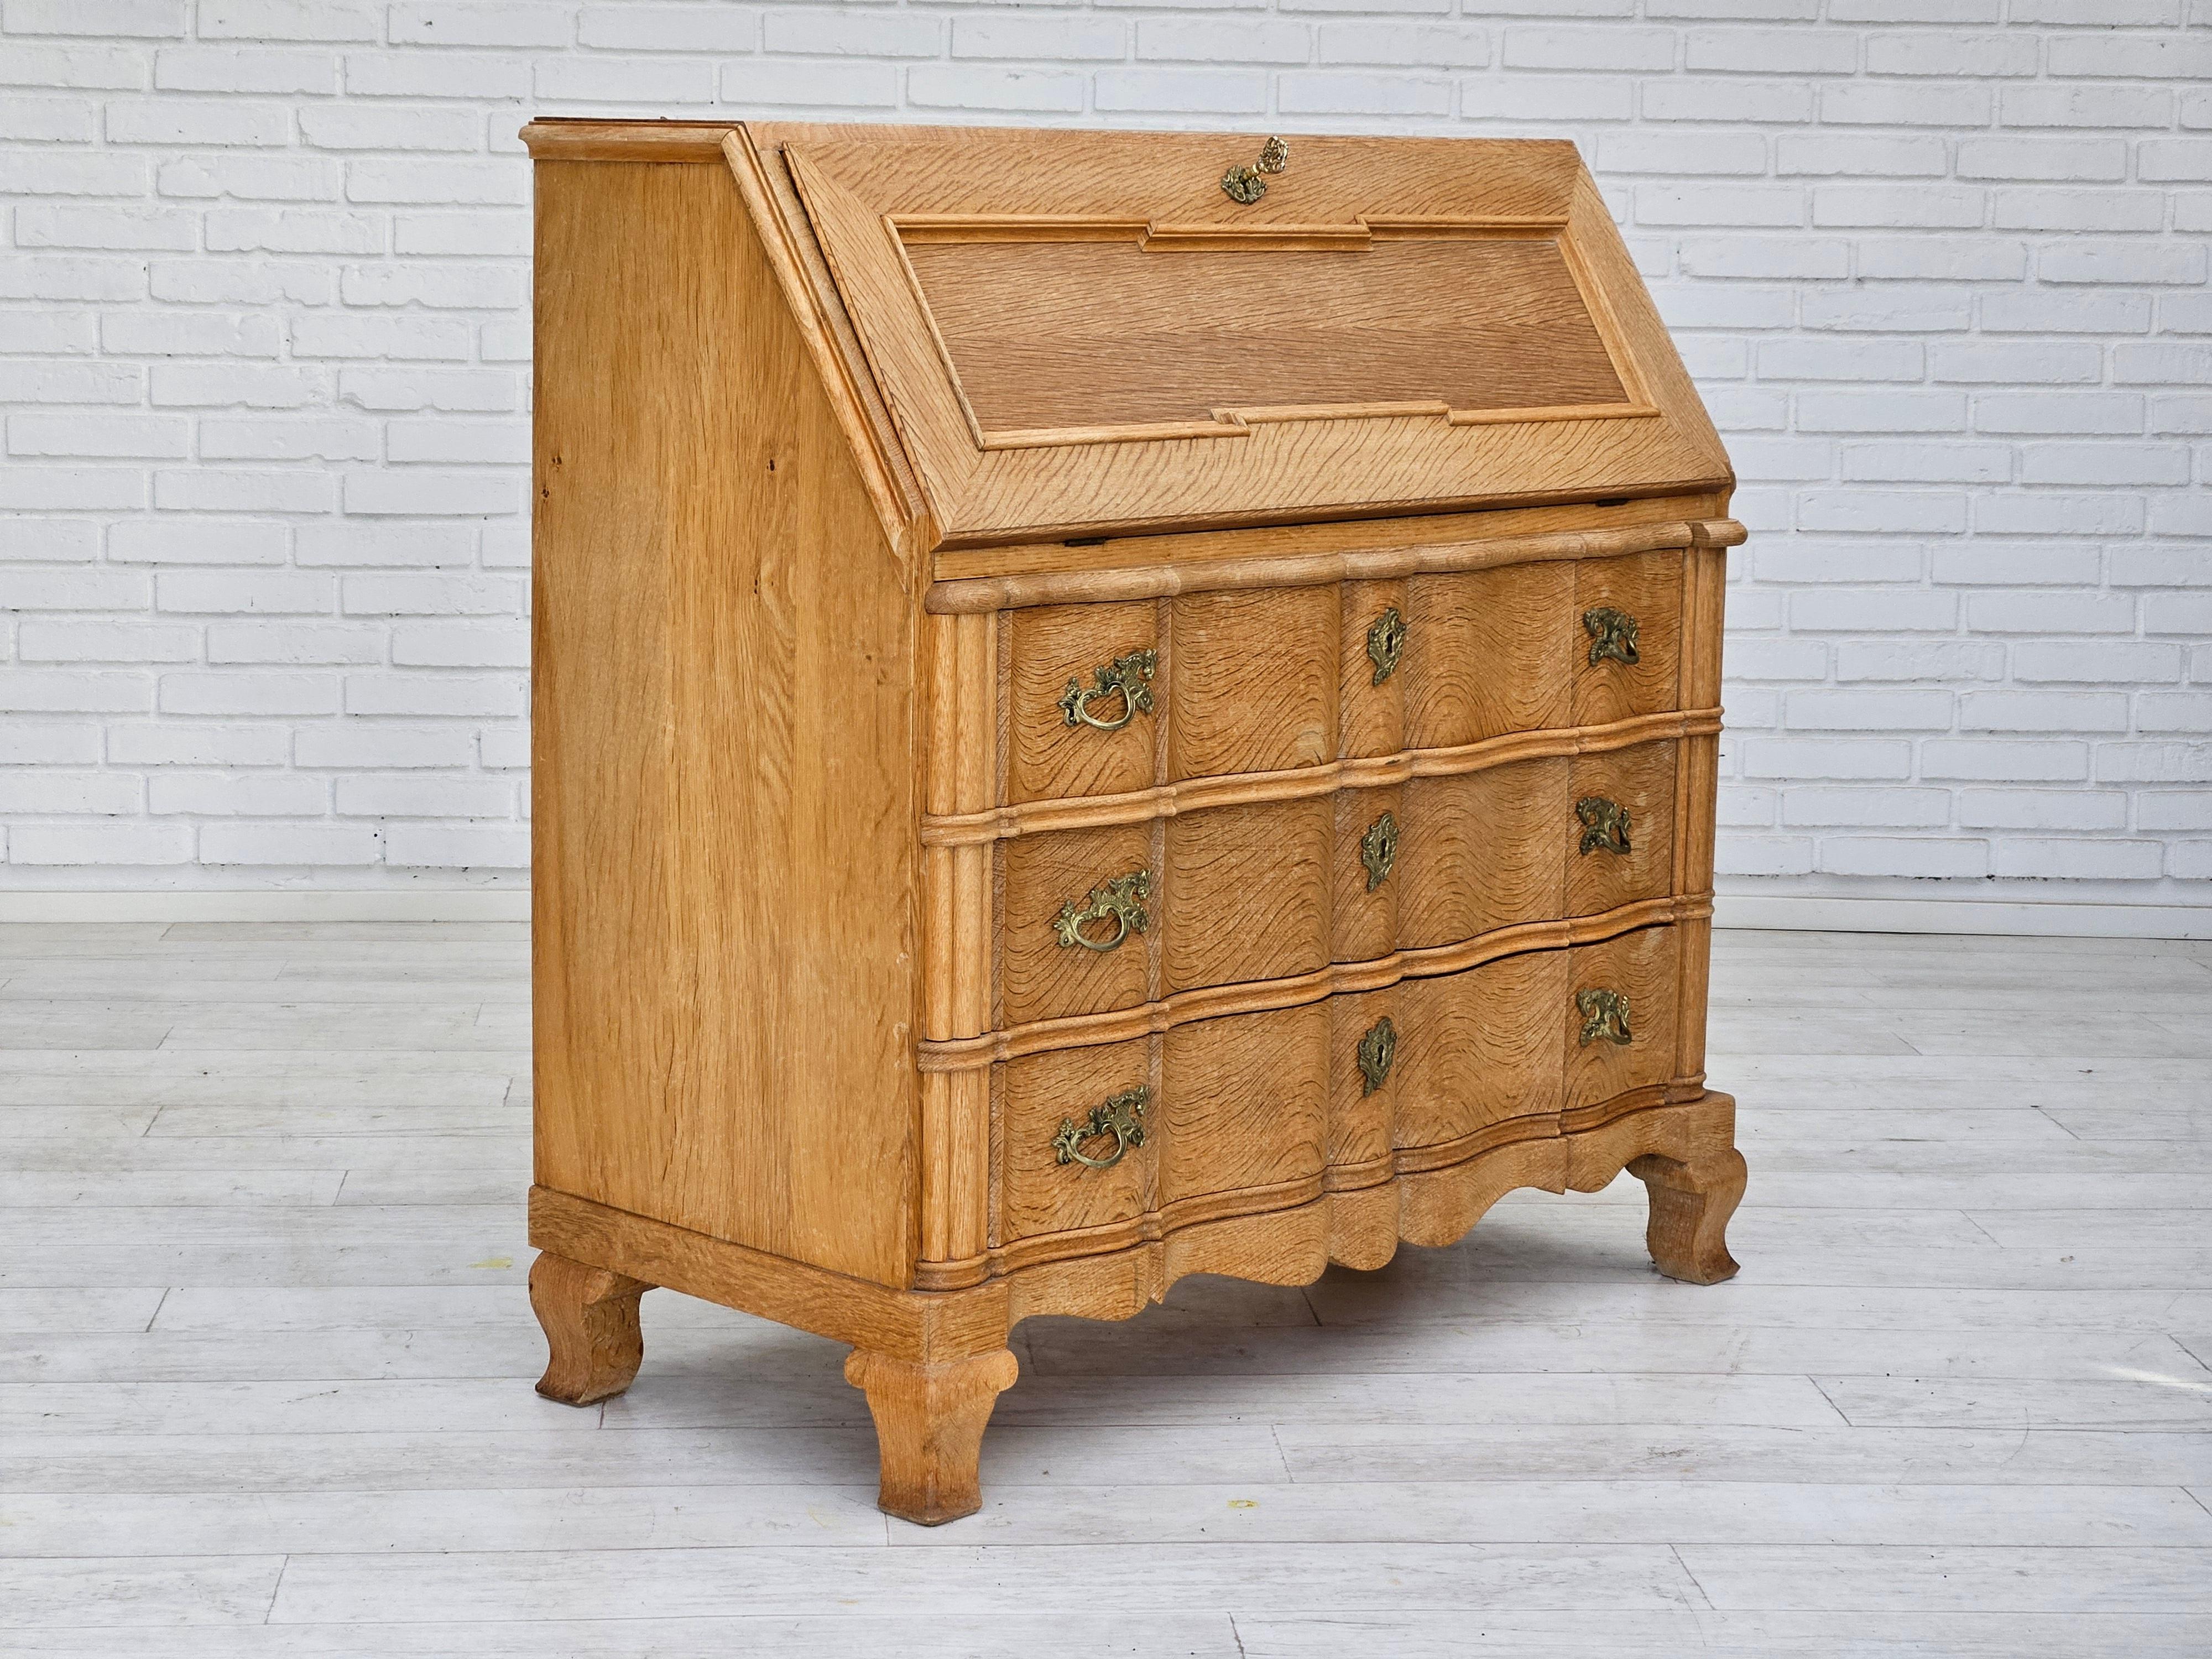 1970s, Danish chest of drawers, oak wood, original condition. 12